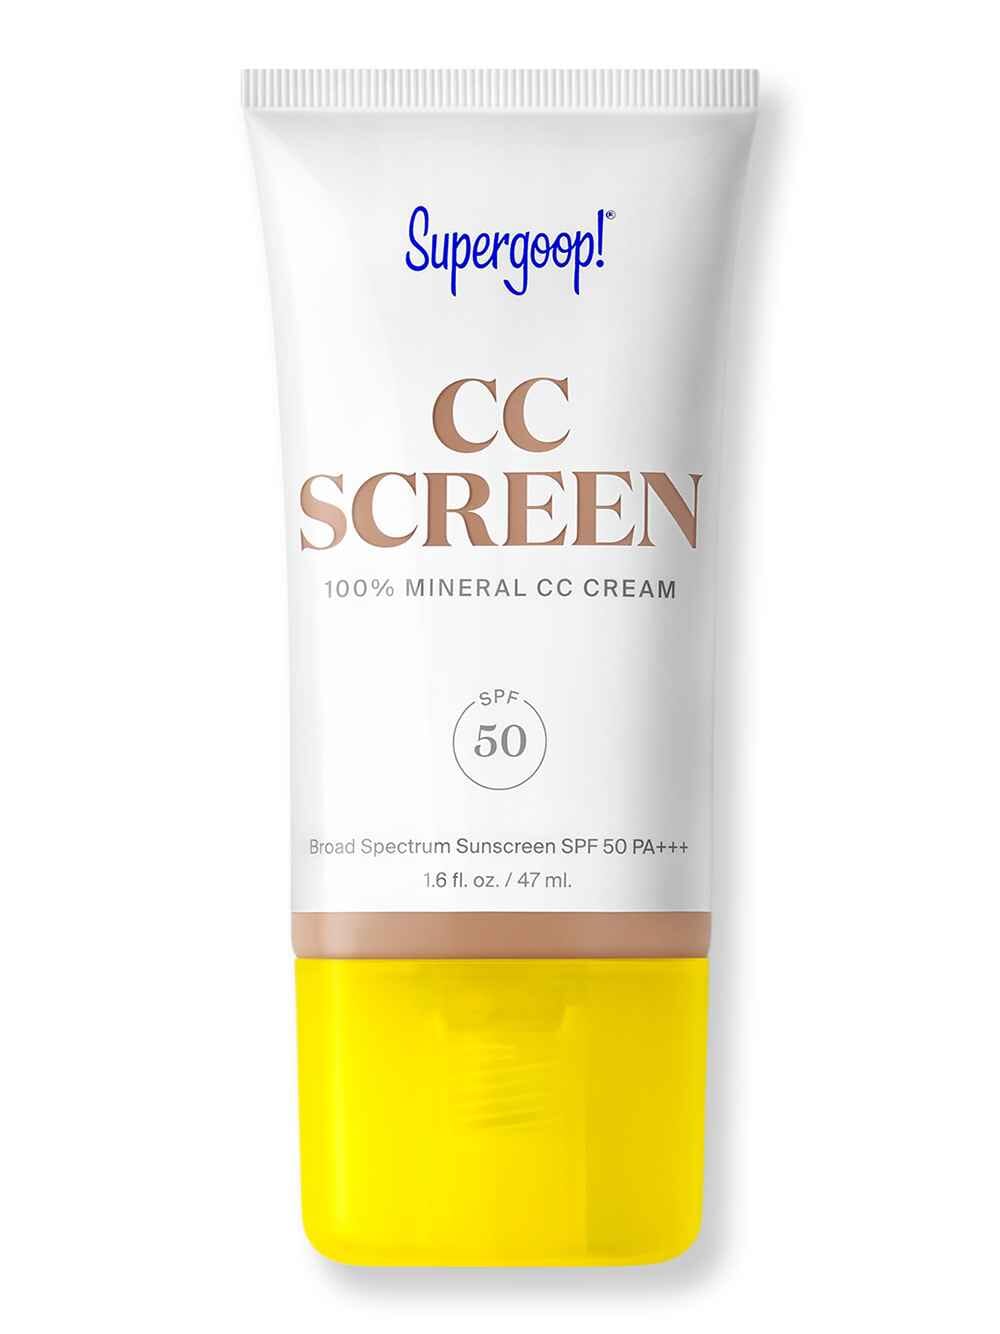 Supergoop Supergoop CC Screen 100% Mineral CC Cream SPF 50 1.6 fl oz47 ml336W Medium with Warm Undertones BB & CC Creams 